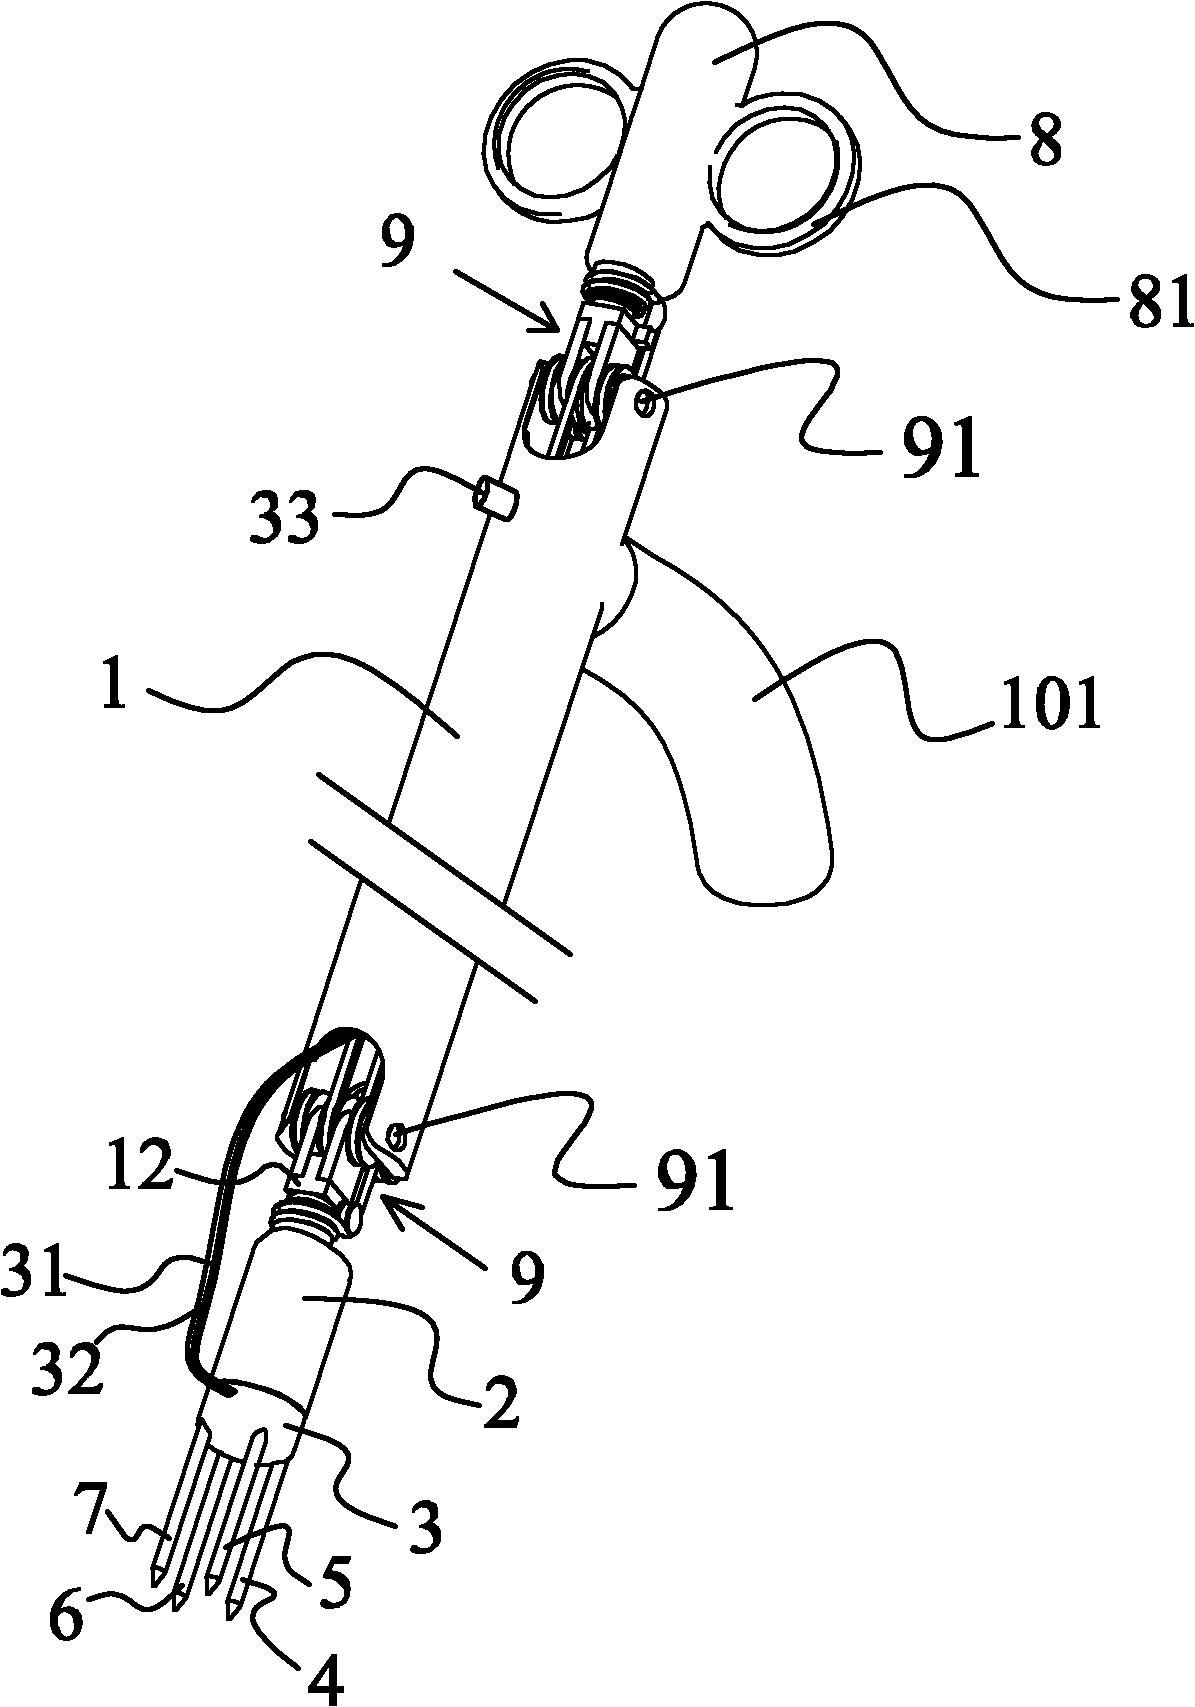 Handheld multi-degree-of-freedom hemostatic cutter for endoscope